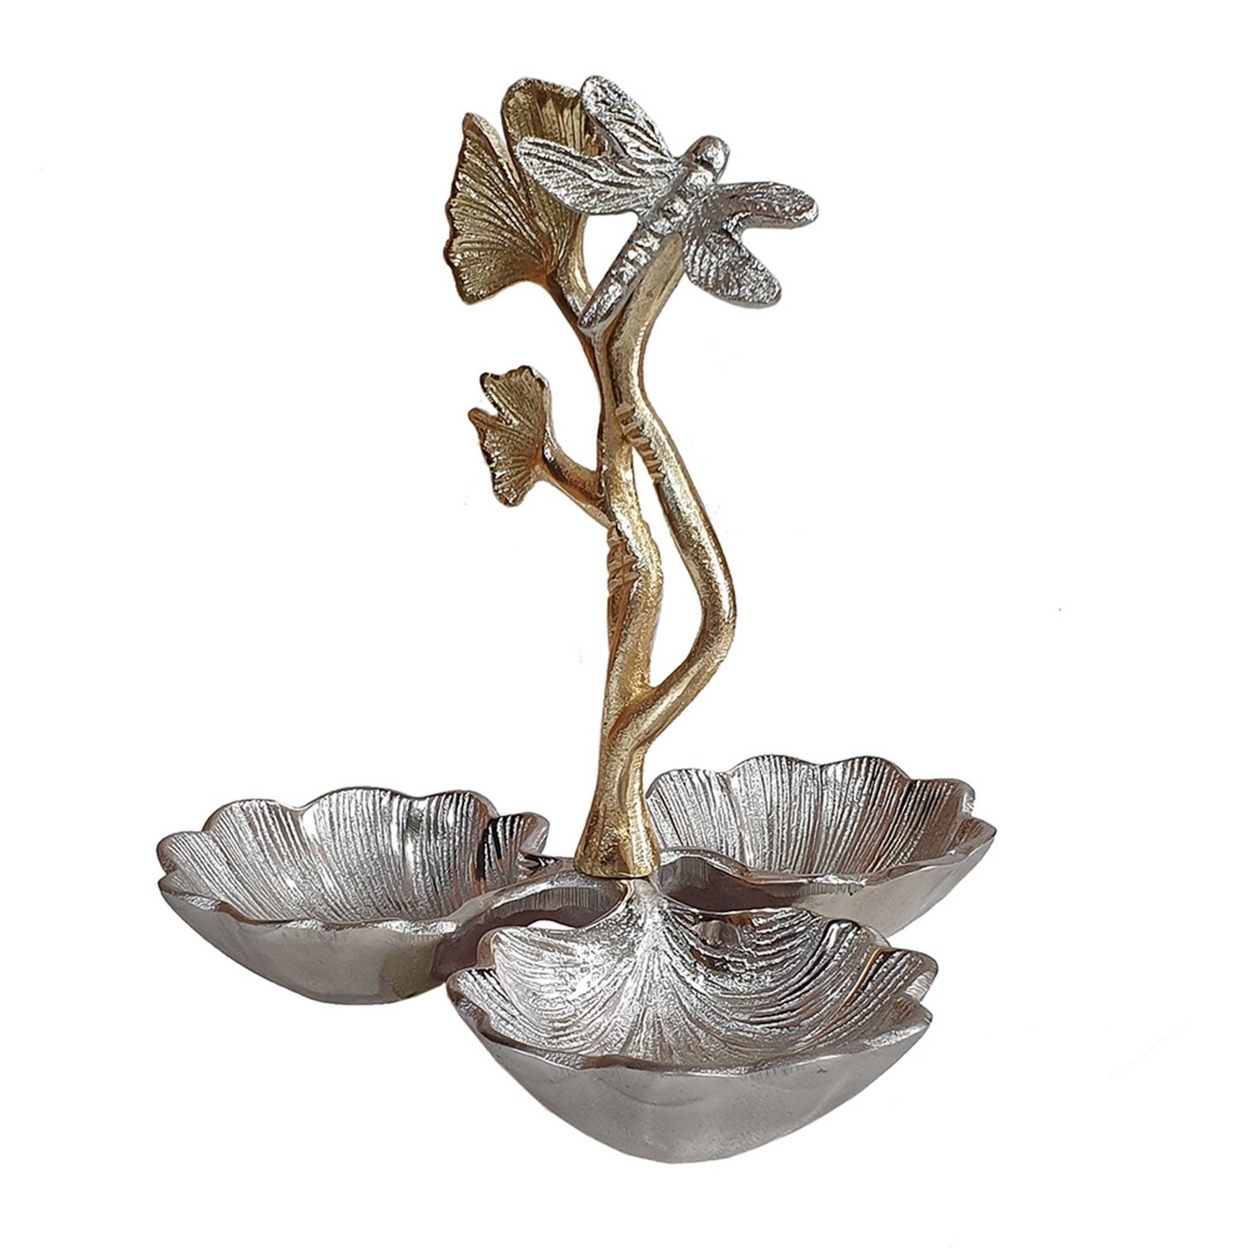 Keva 9 Inch Decorative Bowl, Curved Leaf Design, 2 Tone Gold, Silver Finish, Saltoro Sherpi